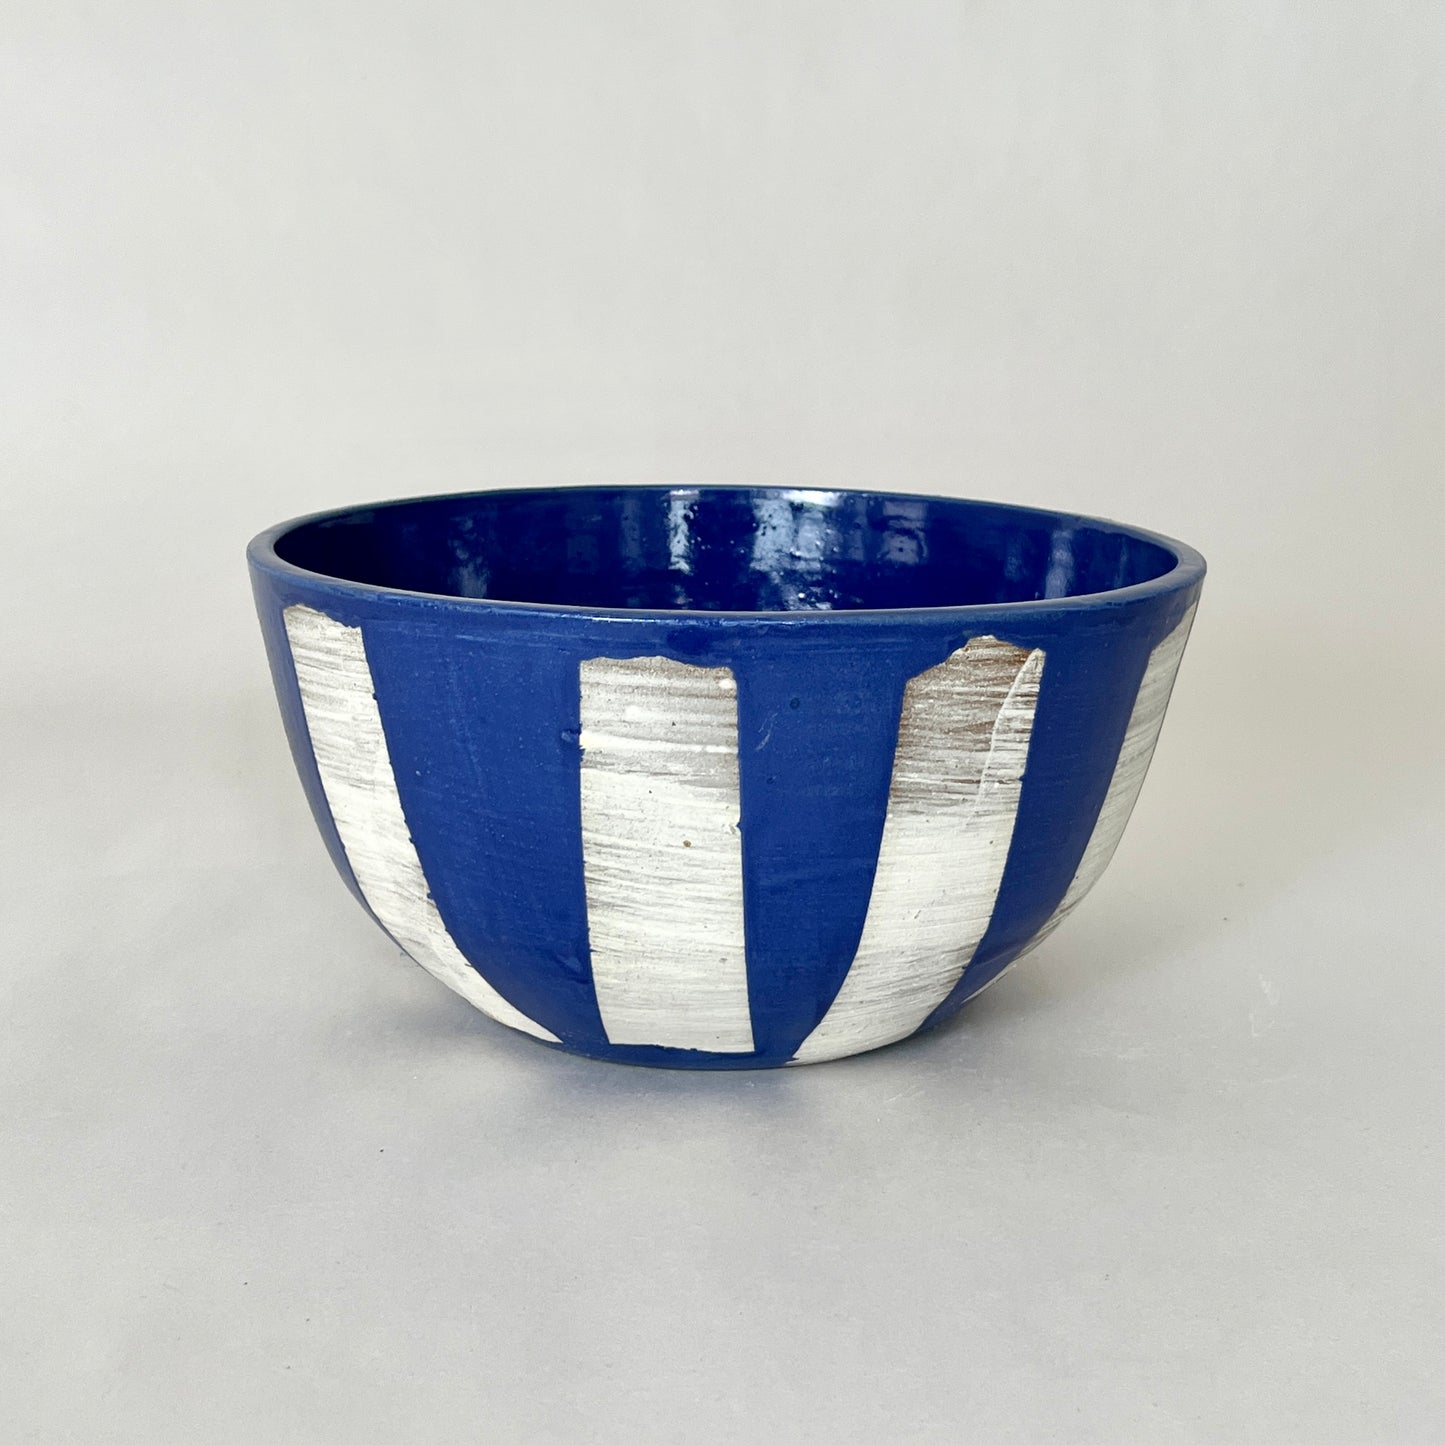 Painter Tape Bowl, Medium Blue/White